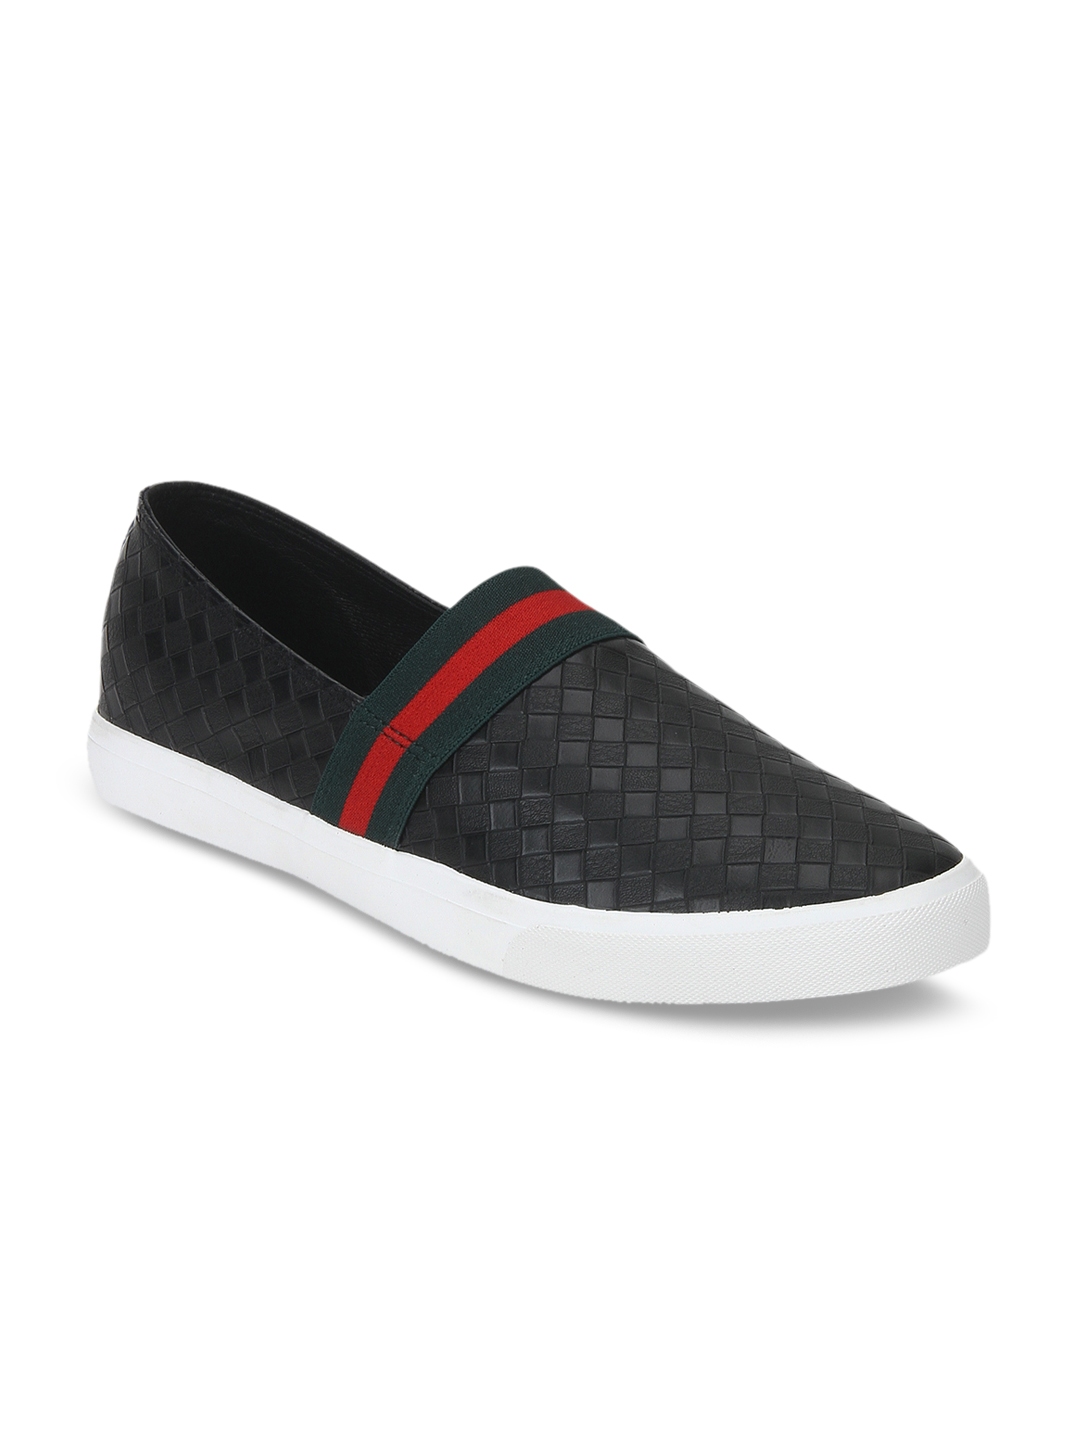 red tape black slip on shoes